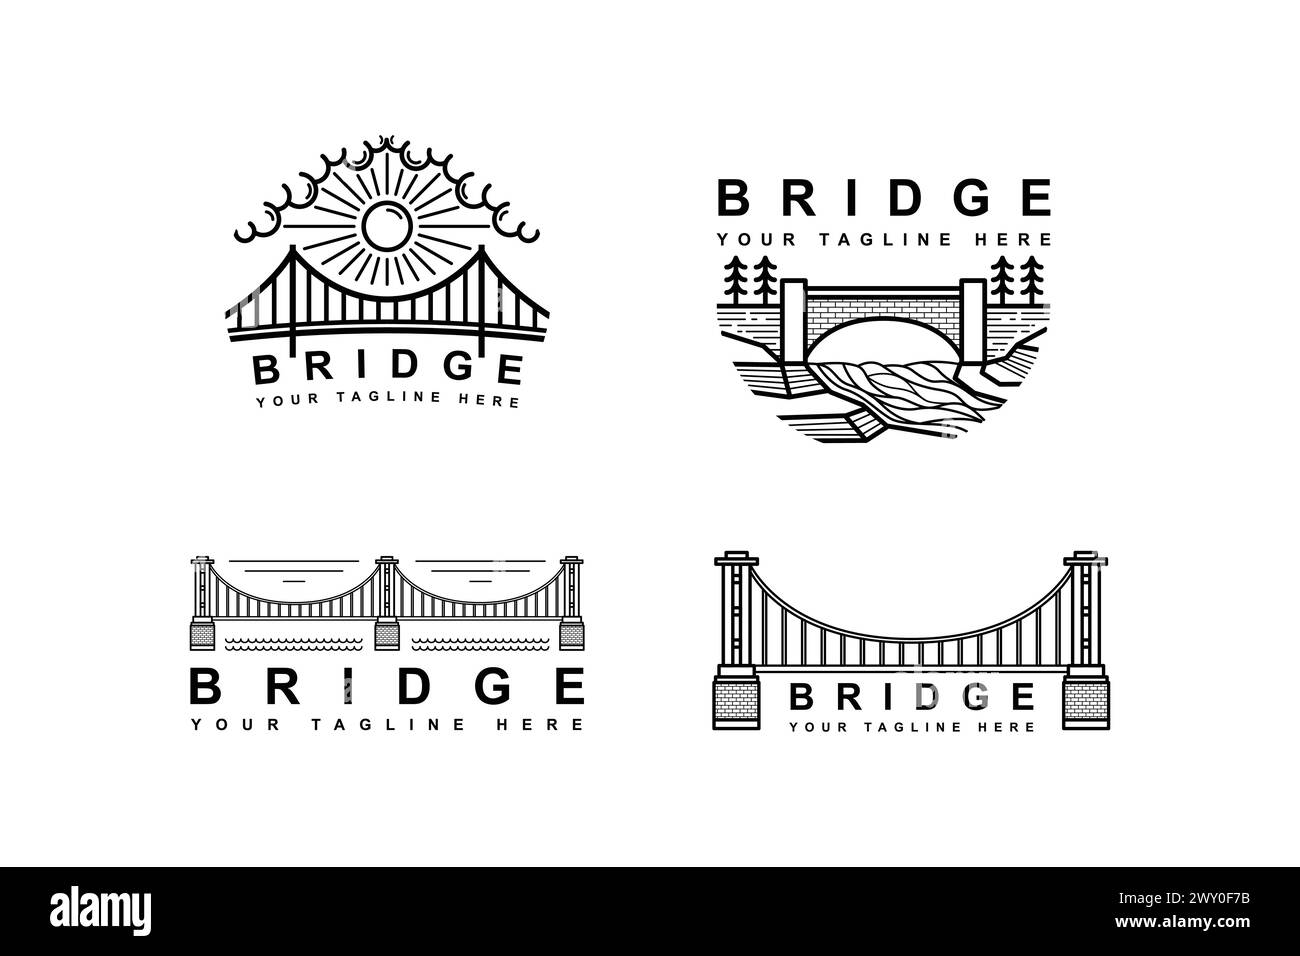 Bridge logo with sun and bridge. line art style logo design in set Stock Vector